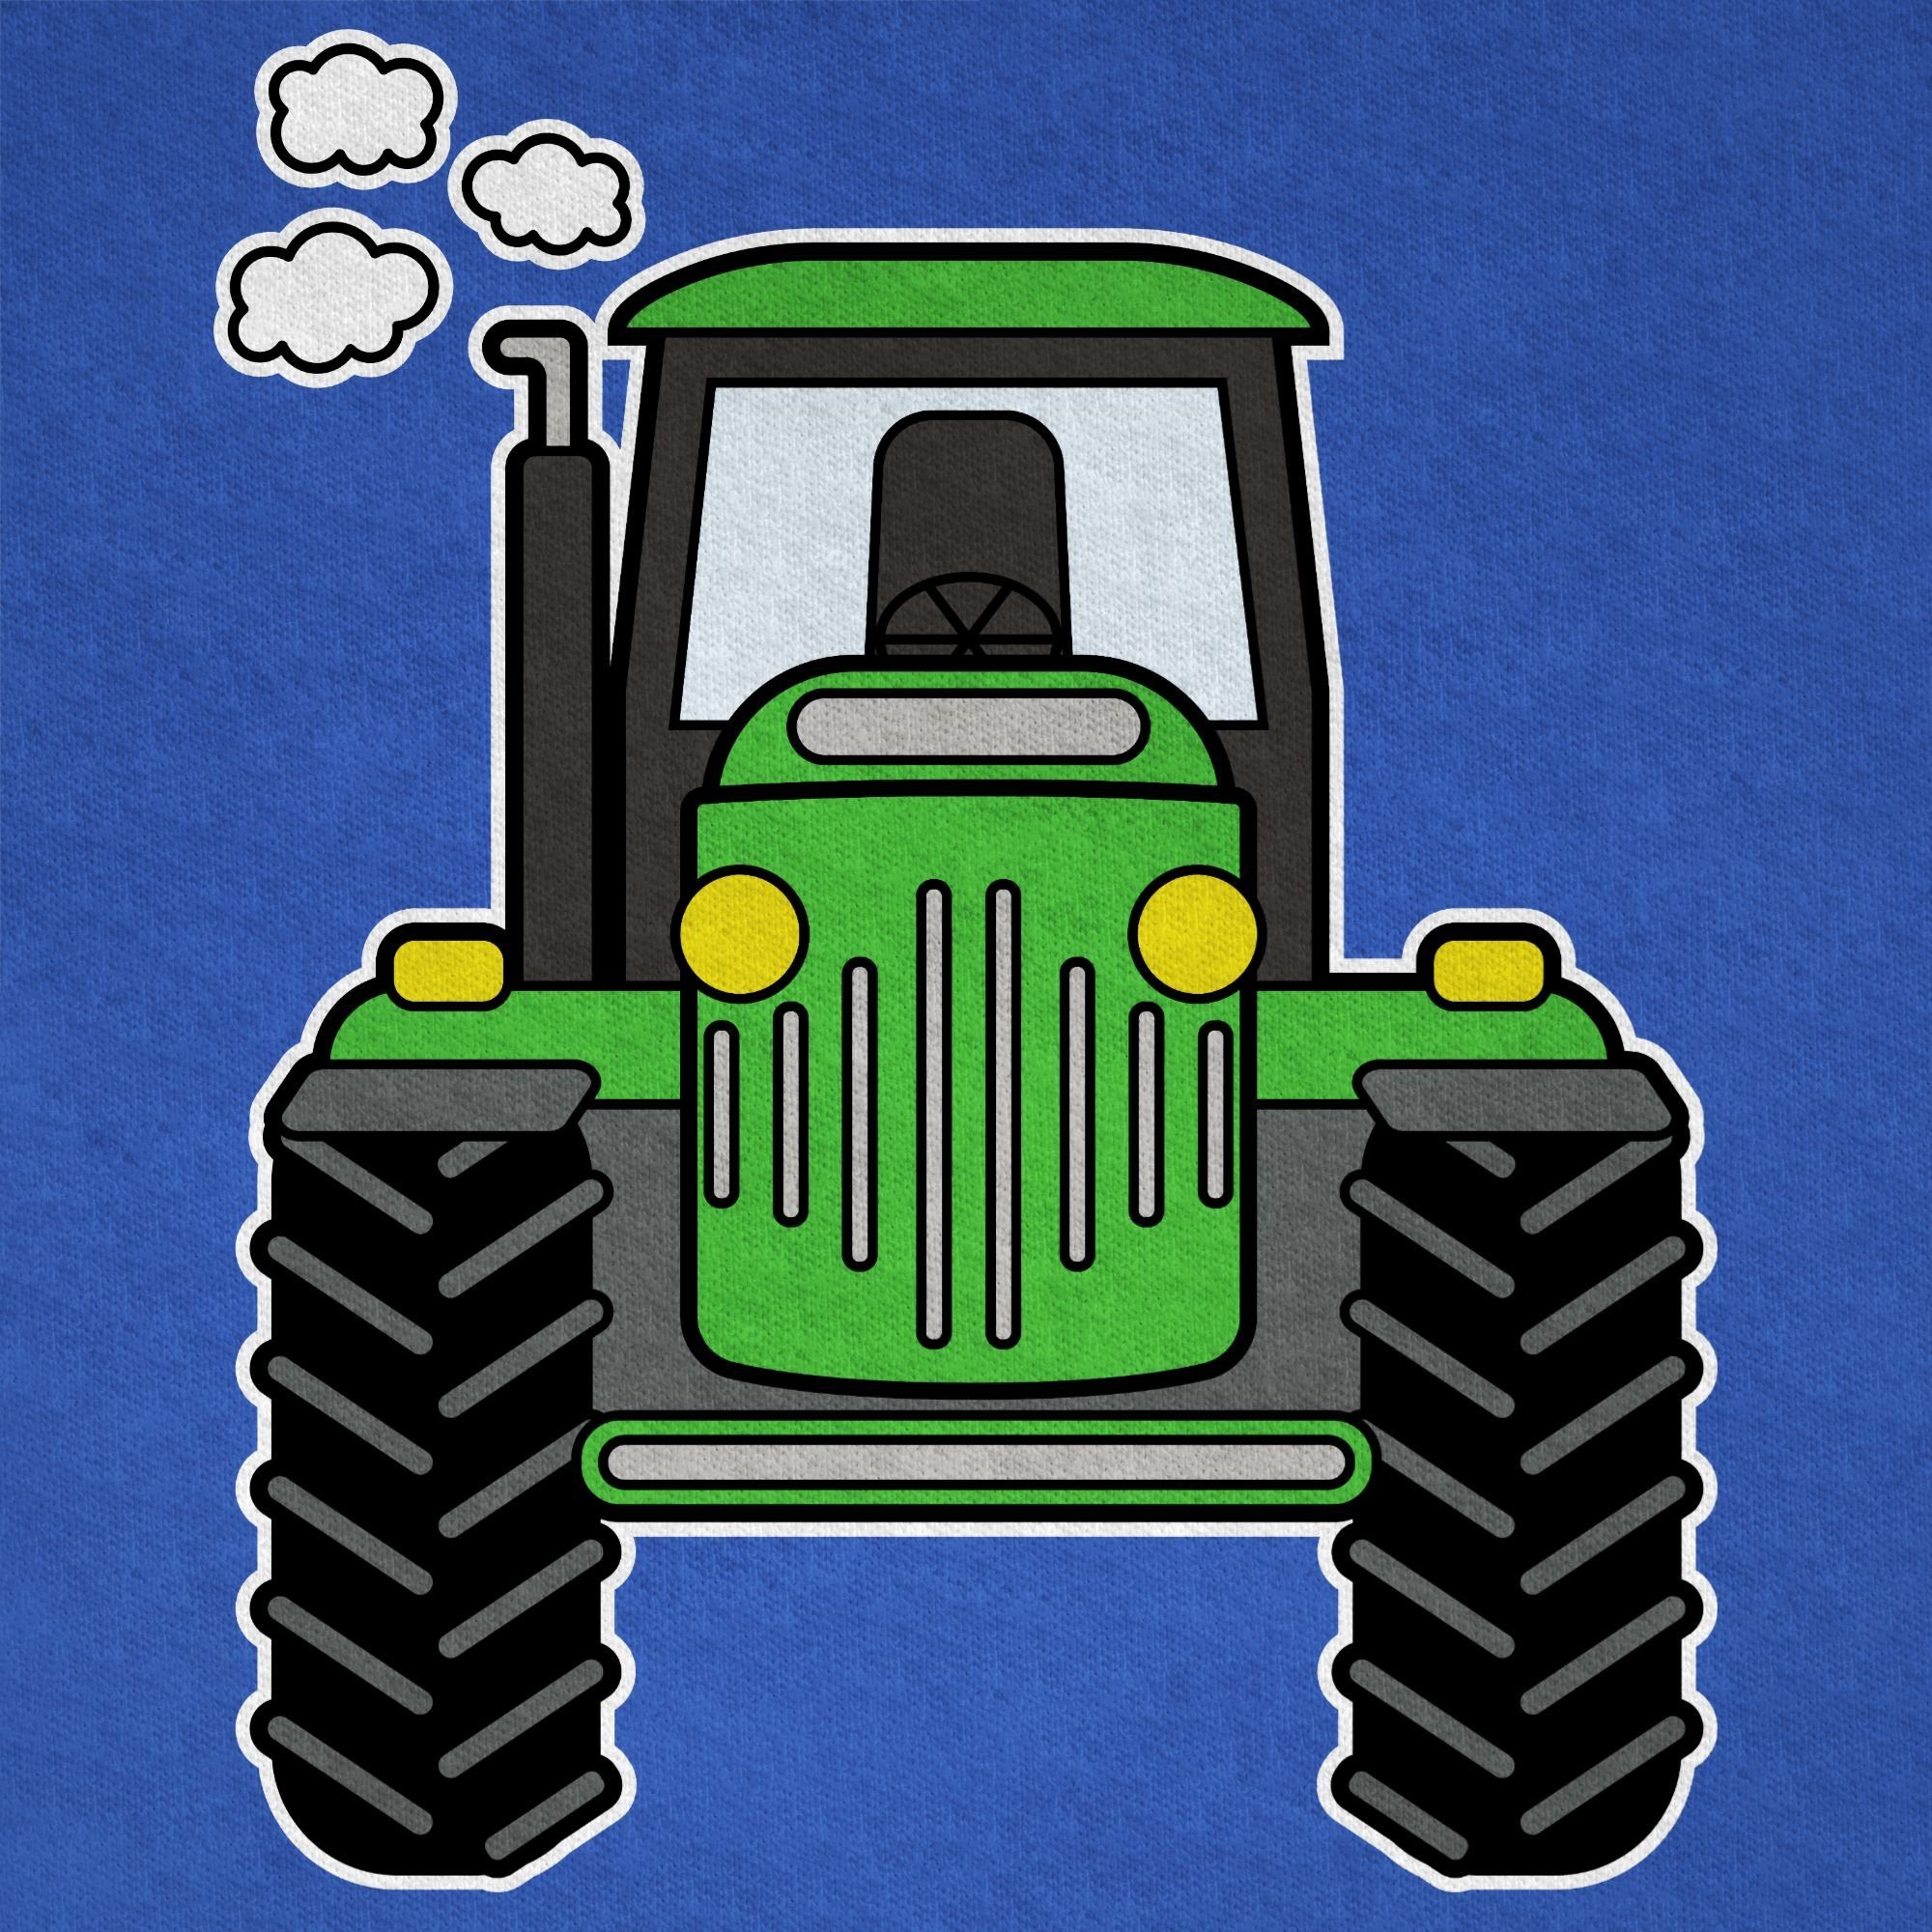 Shirtracer T-Shirt Traktor Front Royalblau 2 Traktor